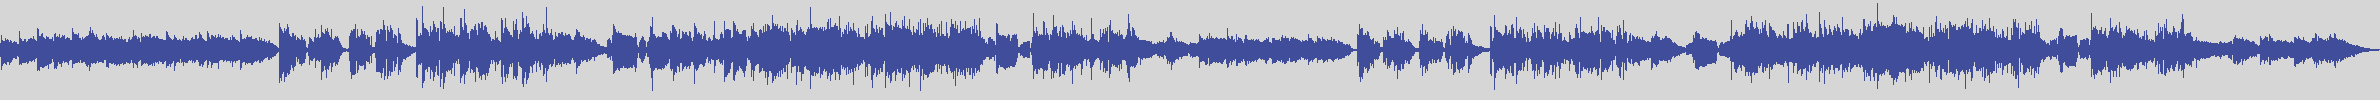 digiphonic_records [DPR002] Nino D'Angelo - E Sto Cu Tte [Original Mix] audio wave form